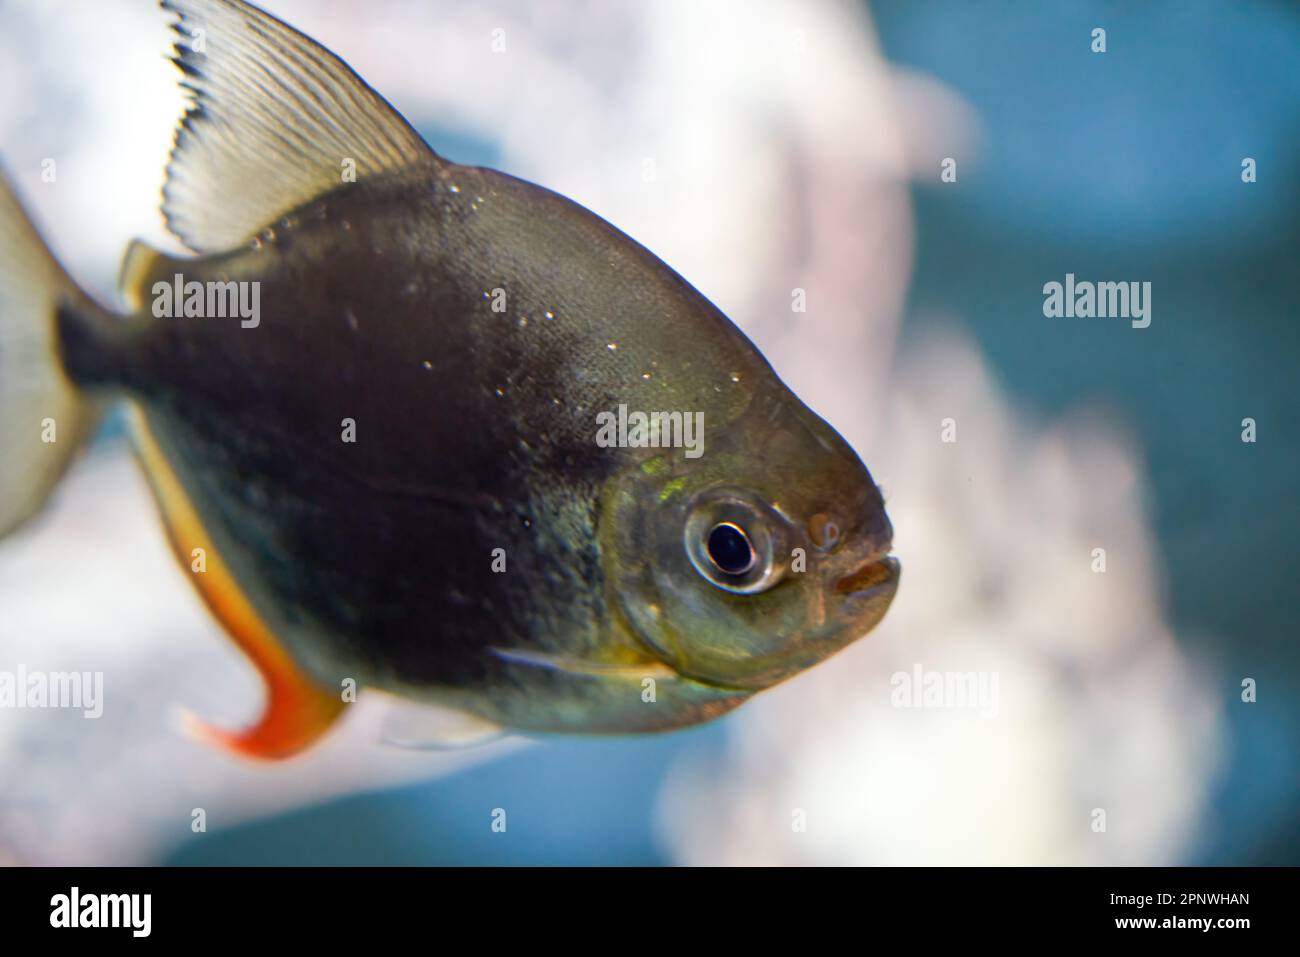 A pet ornamental fish in an aquarium, mango fish closeup Stock Photo